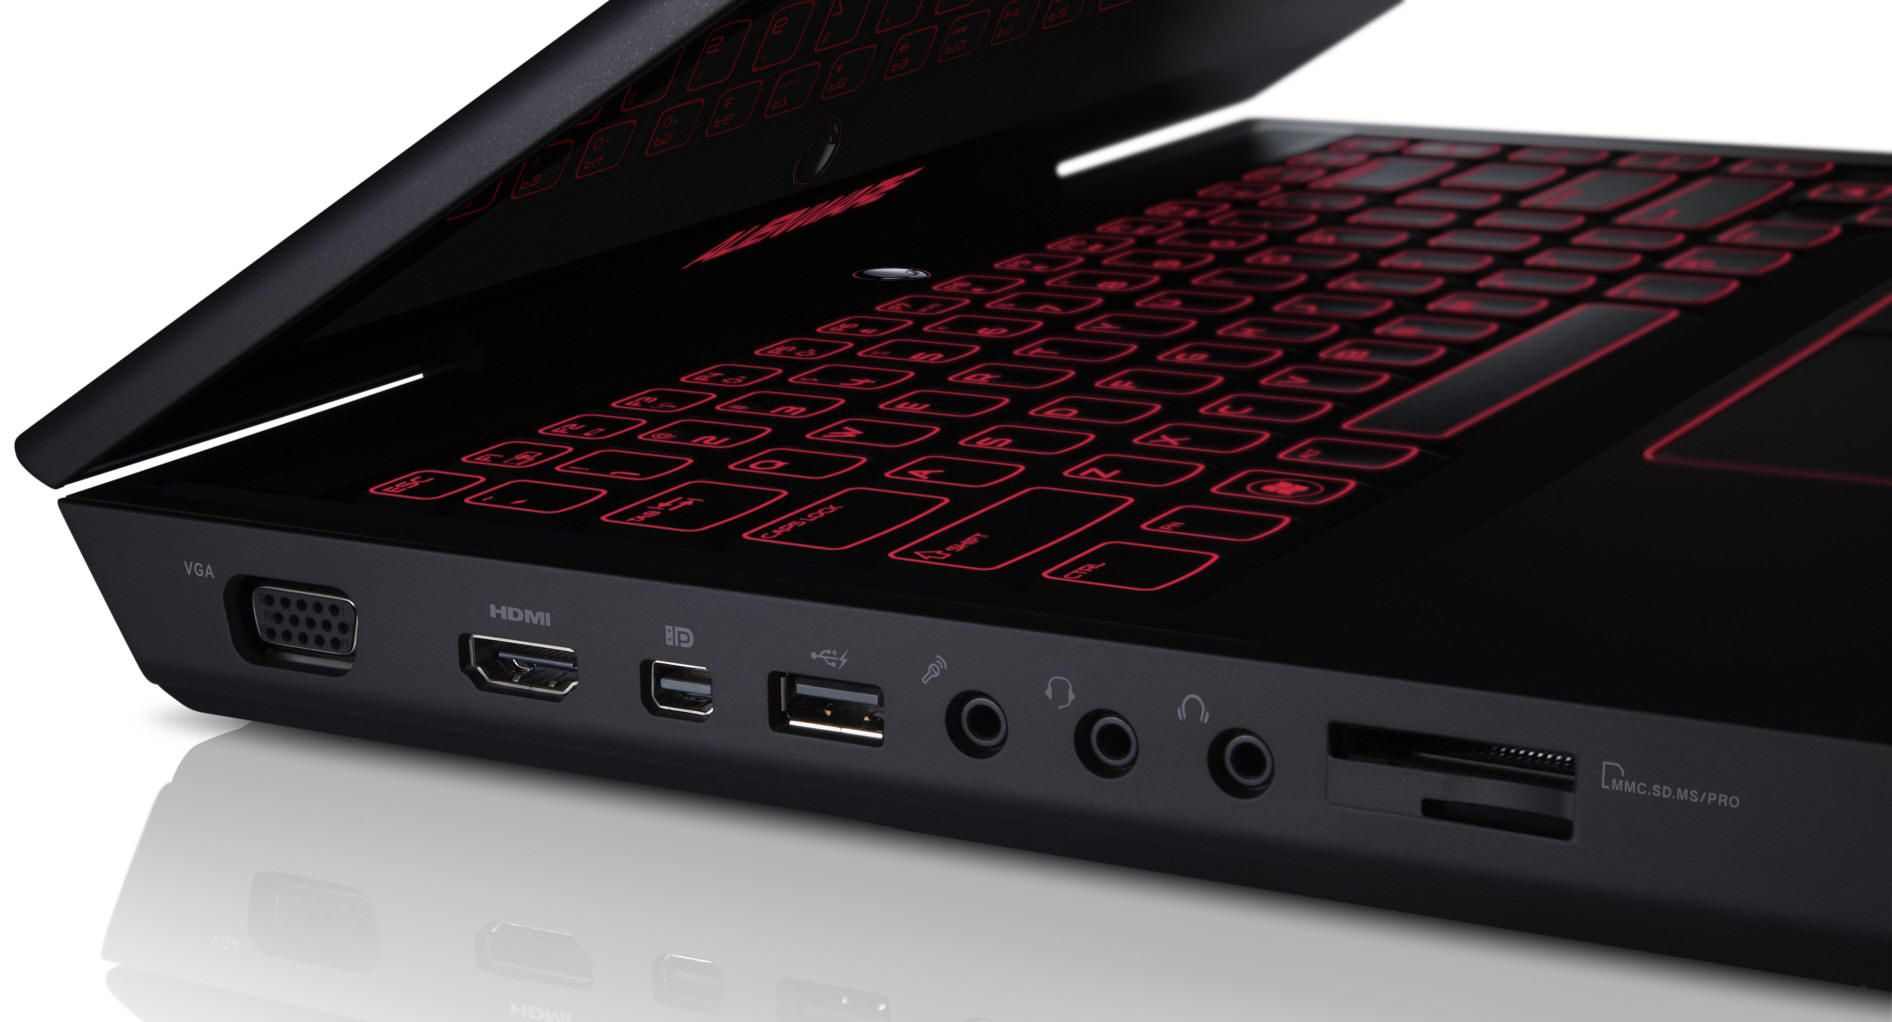   M14X R2 Gaming Laptop nVidia 650m 2gb CUSTOM + 16gb 1600mhz +14 900P